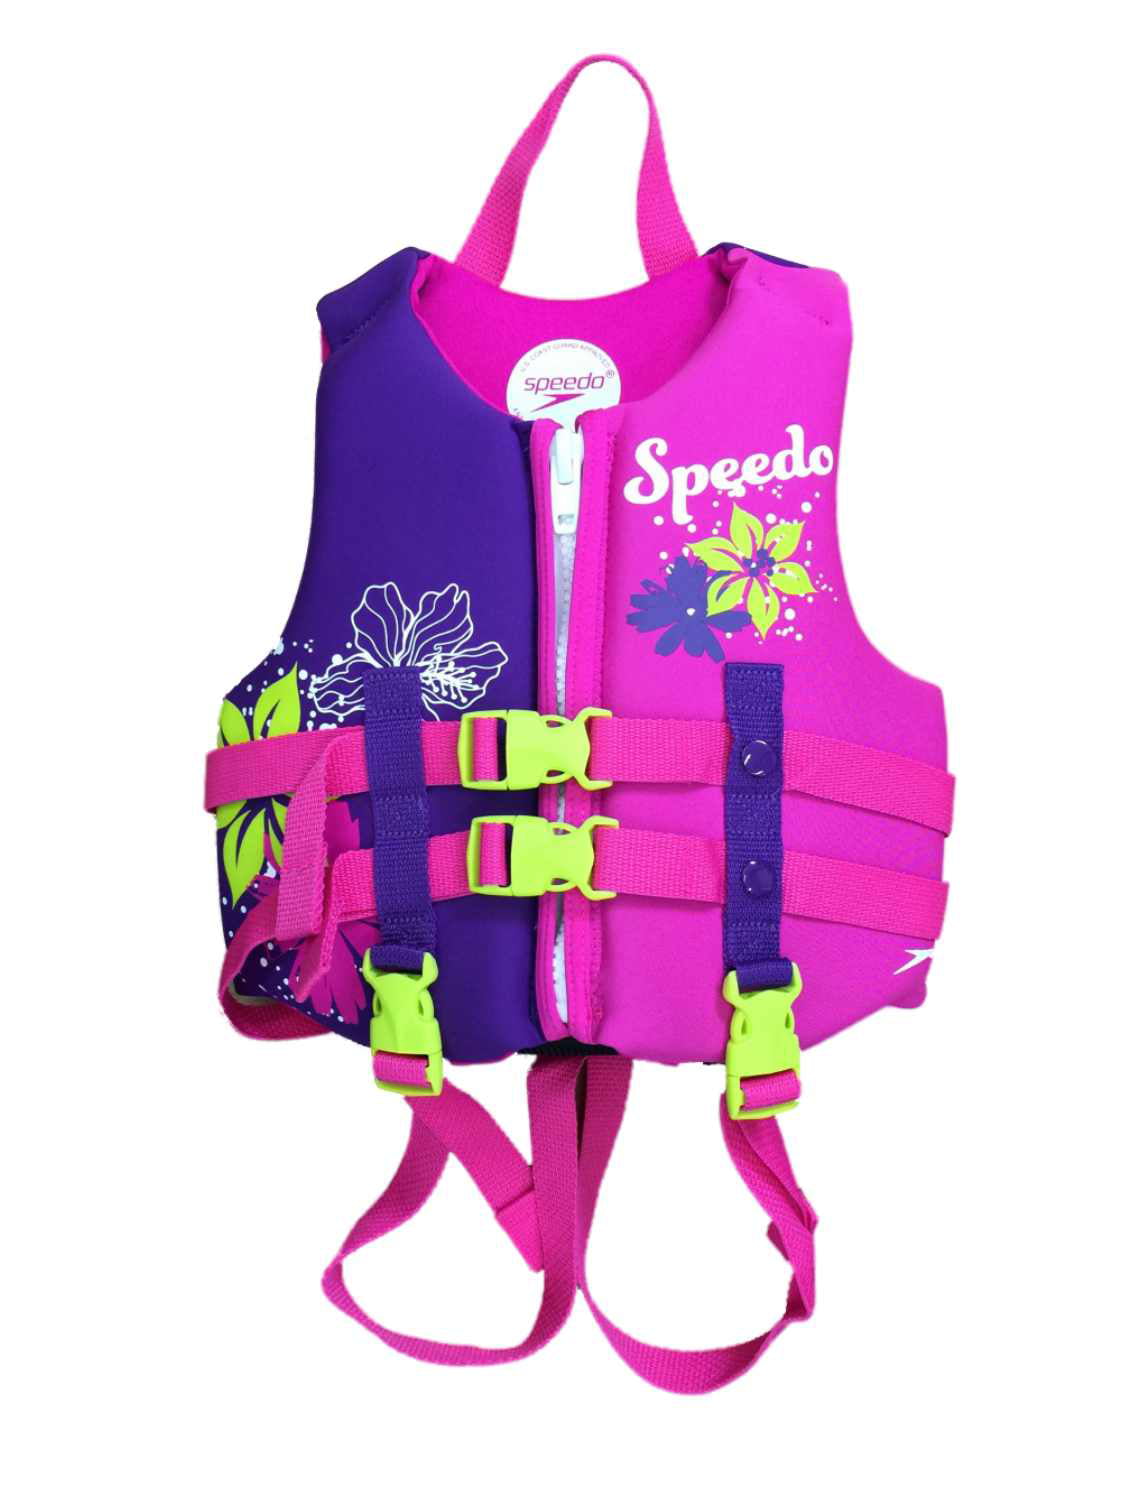 Speedo girls child pfd life jacket vests island level 2 quotes forex